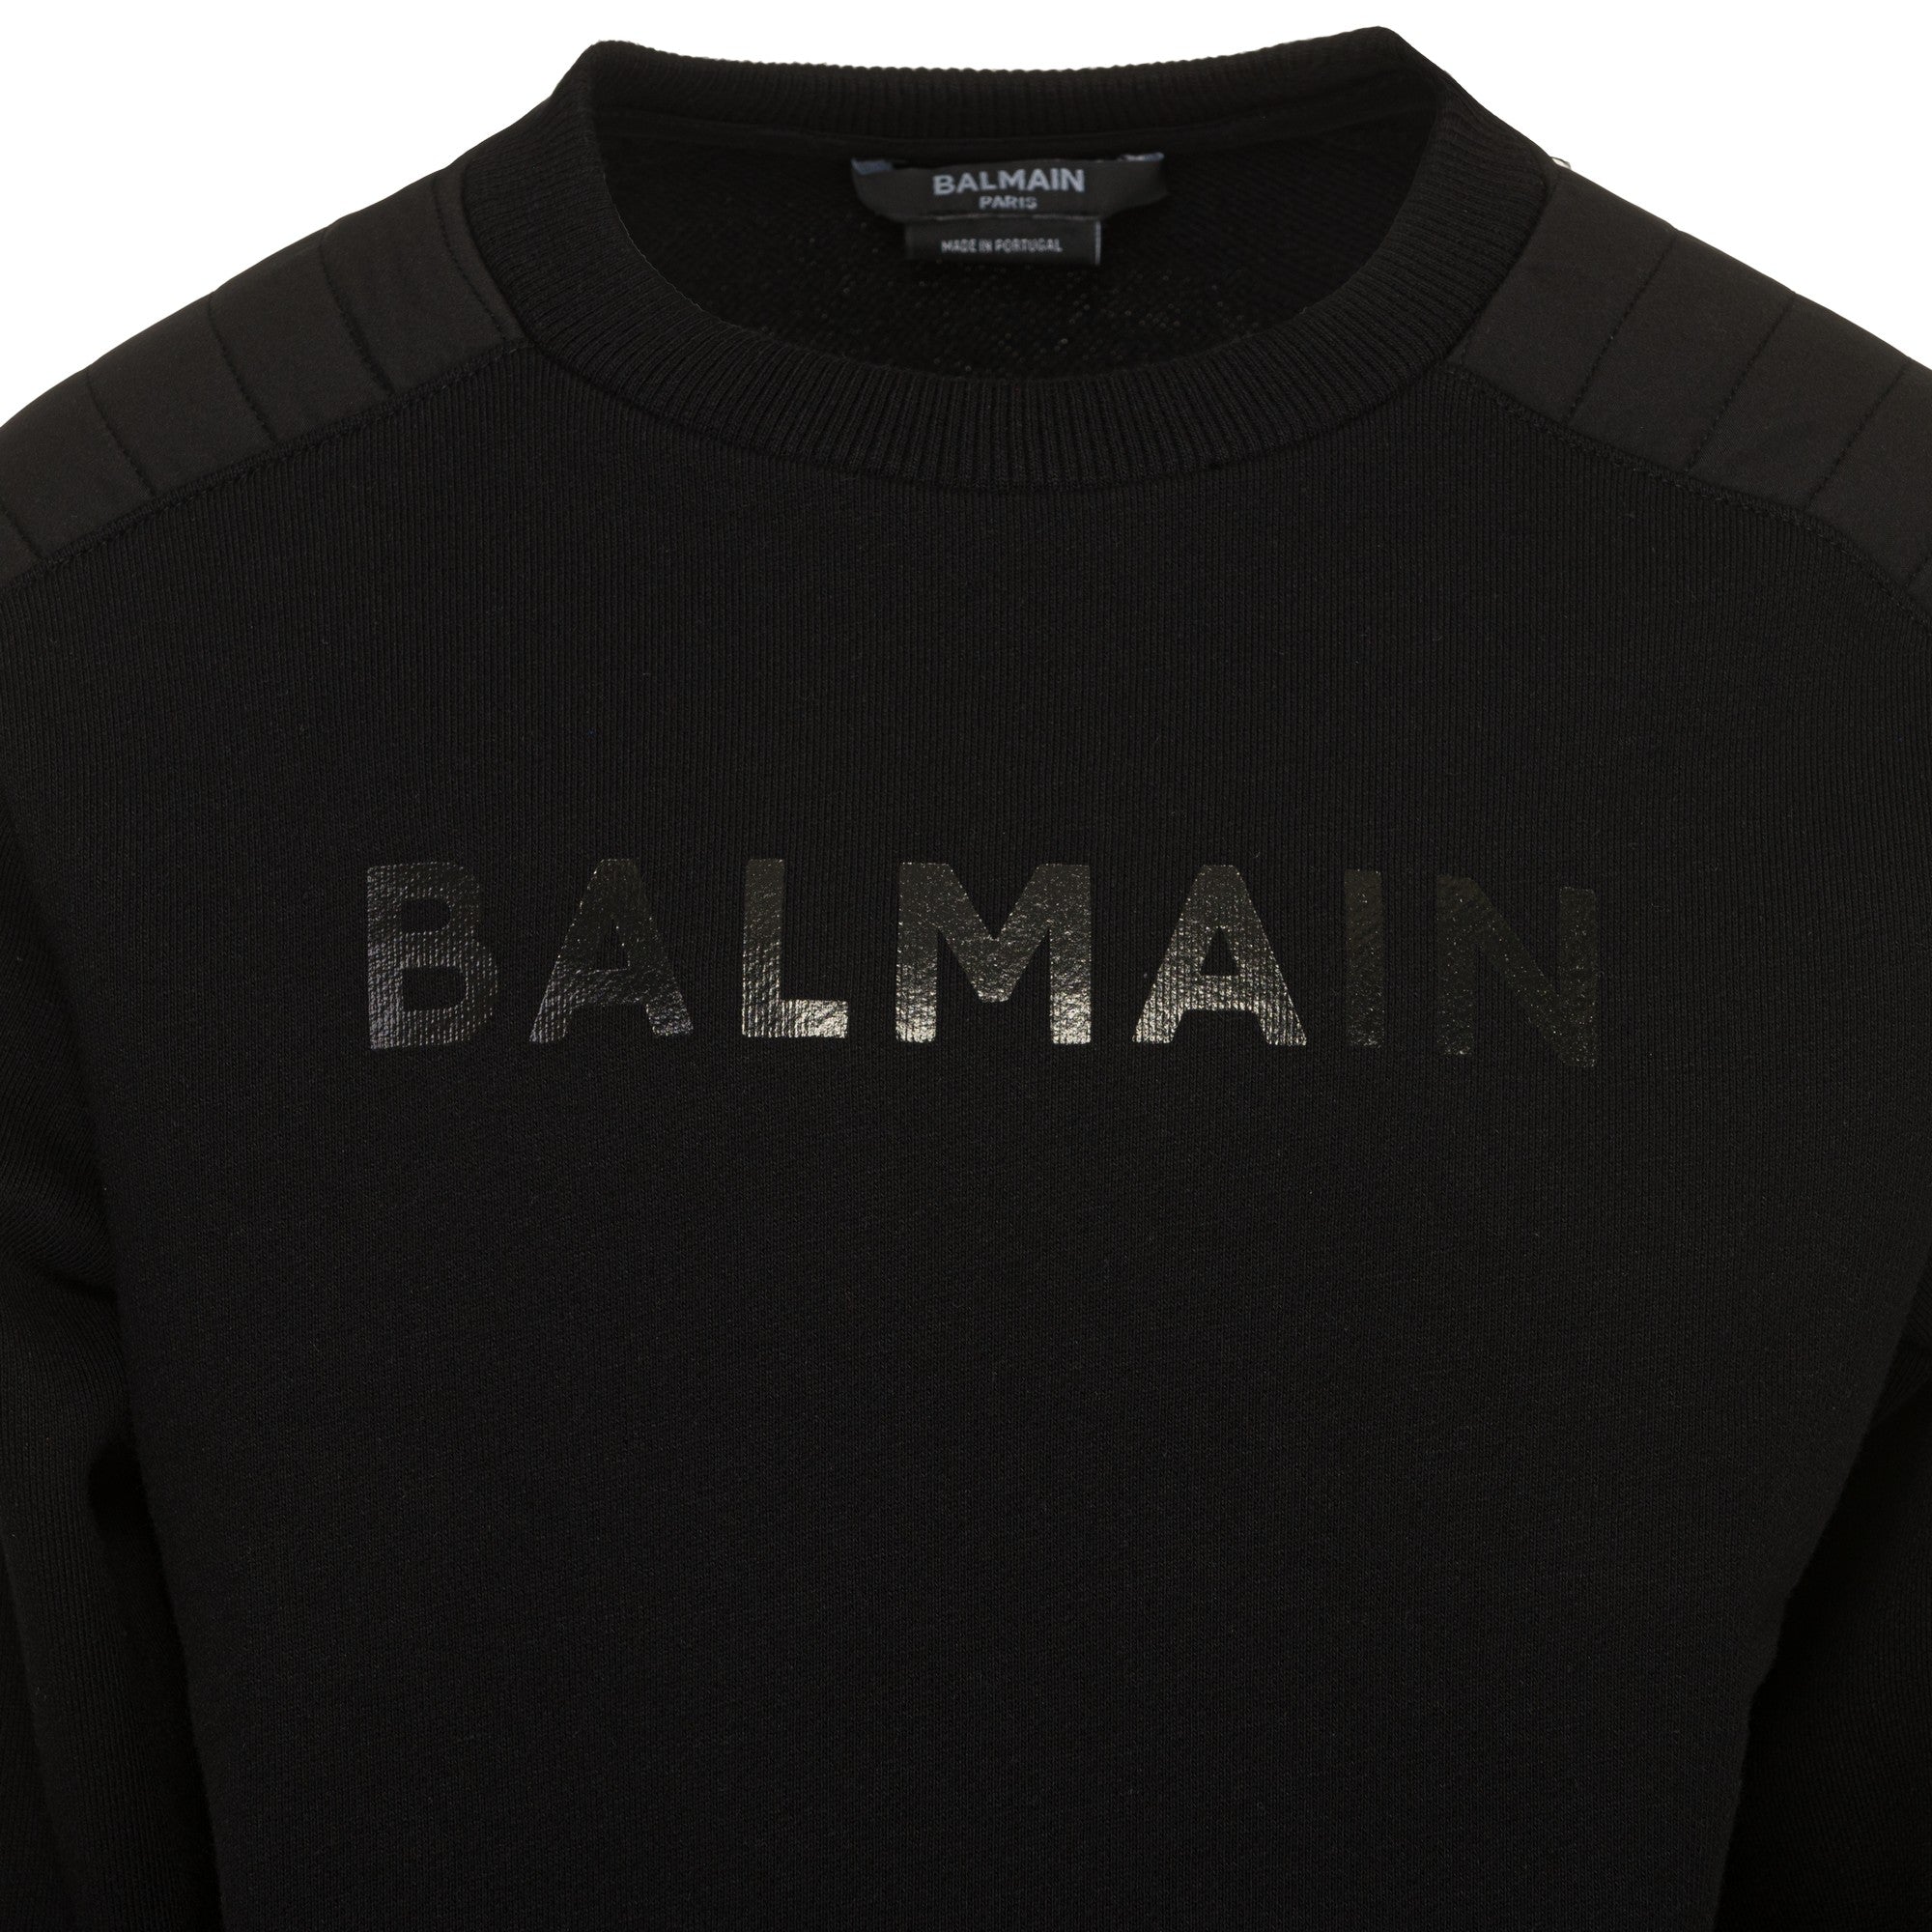 Balmain Monochrome Sweatshirt